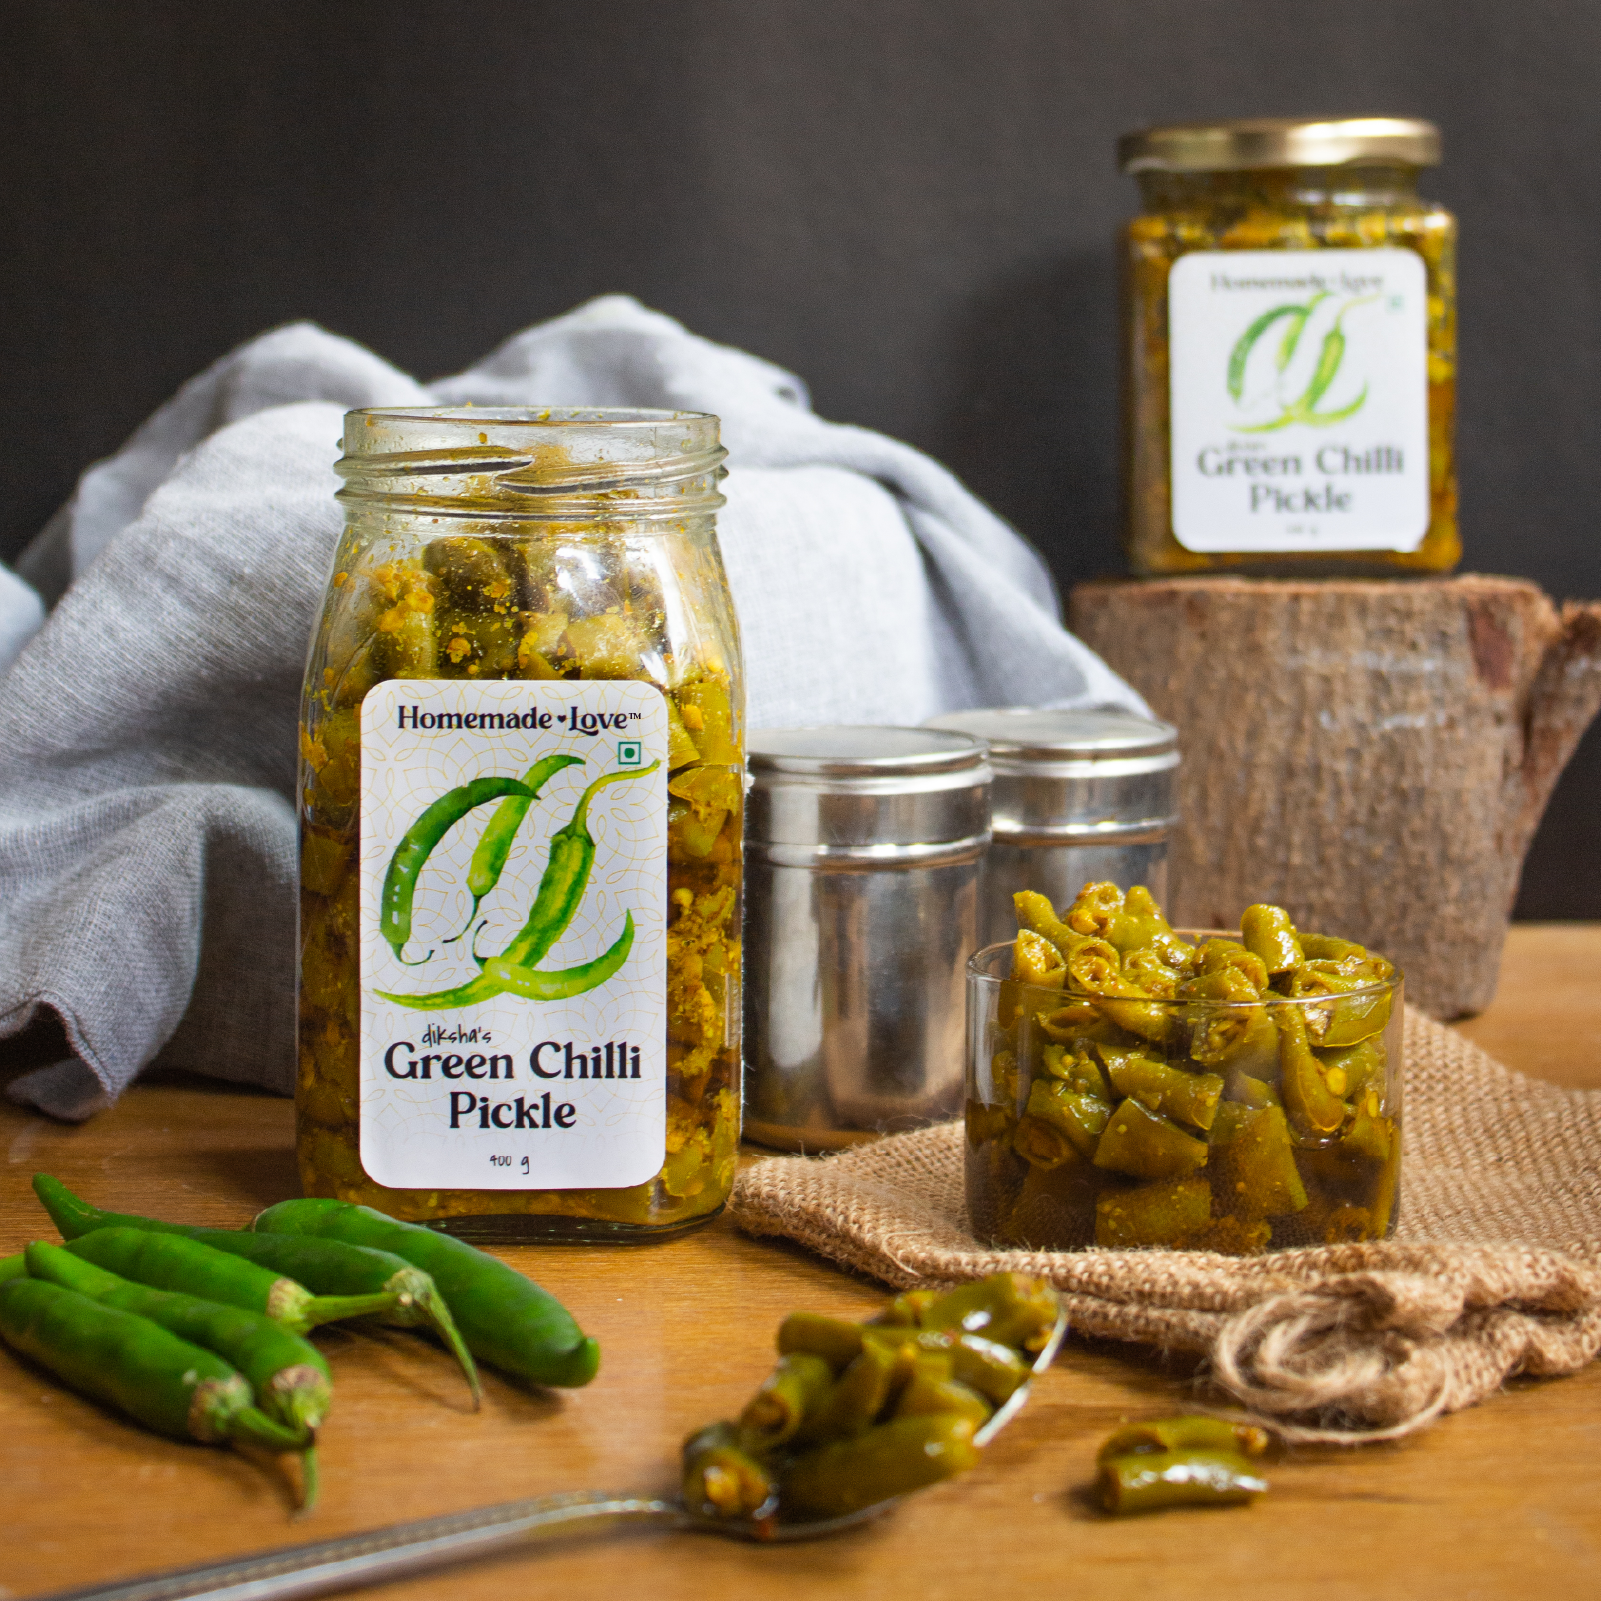 Homemade Love - Green Chilli Pickle